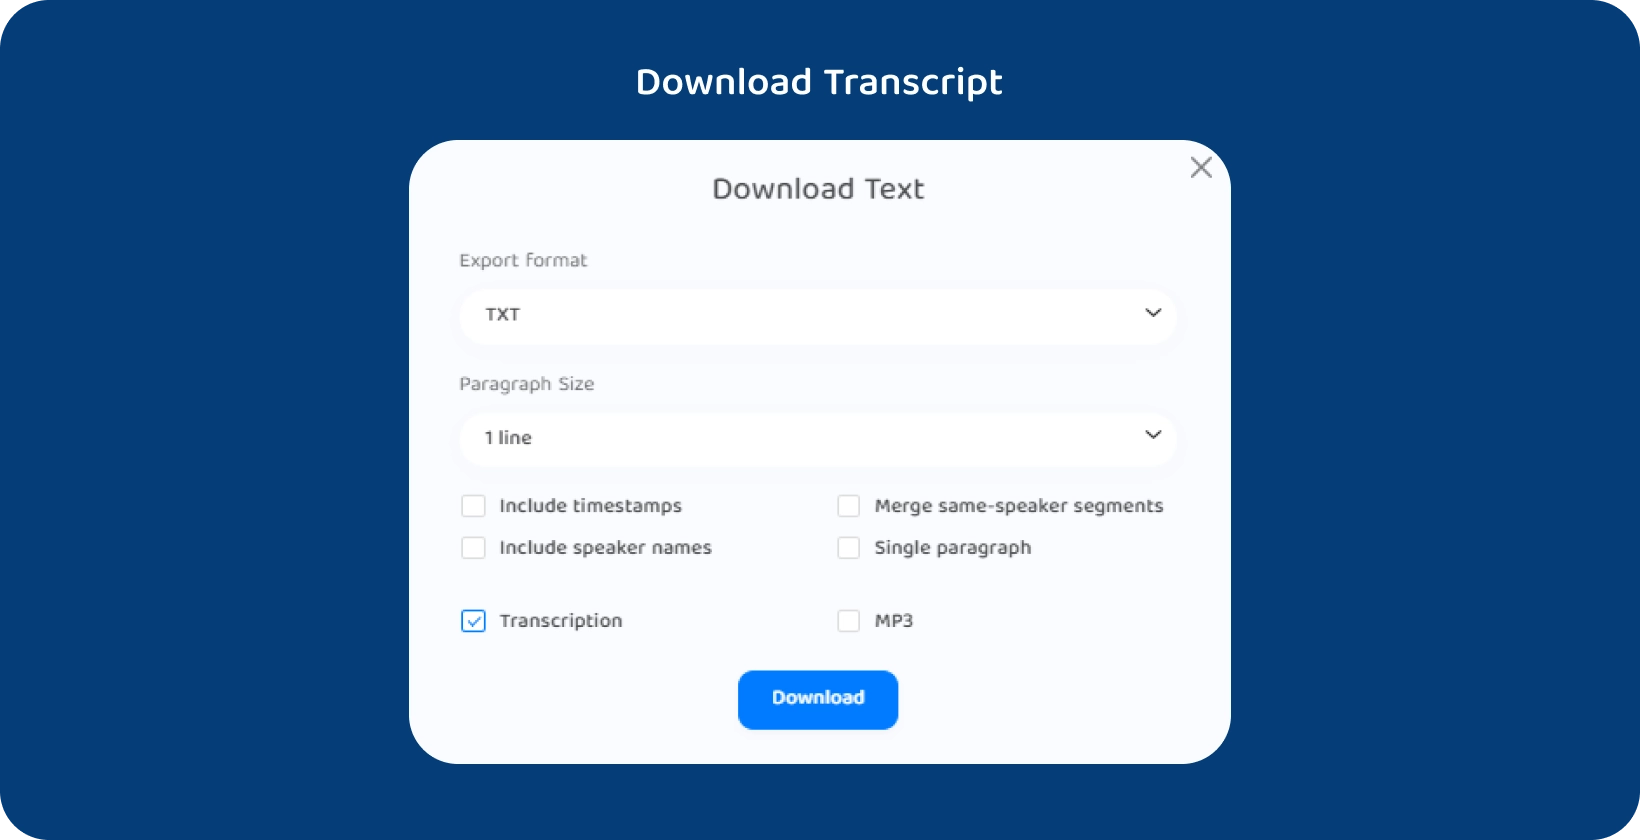 Transkriptor 界面显示用于下载转录讲座文本的选项。